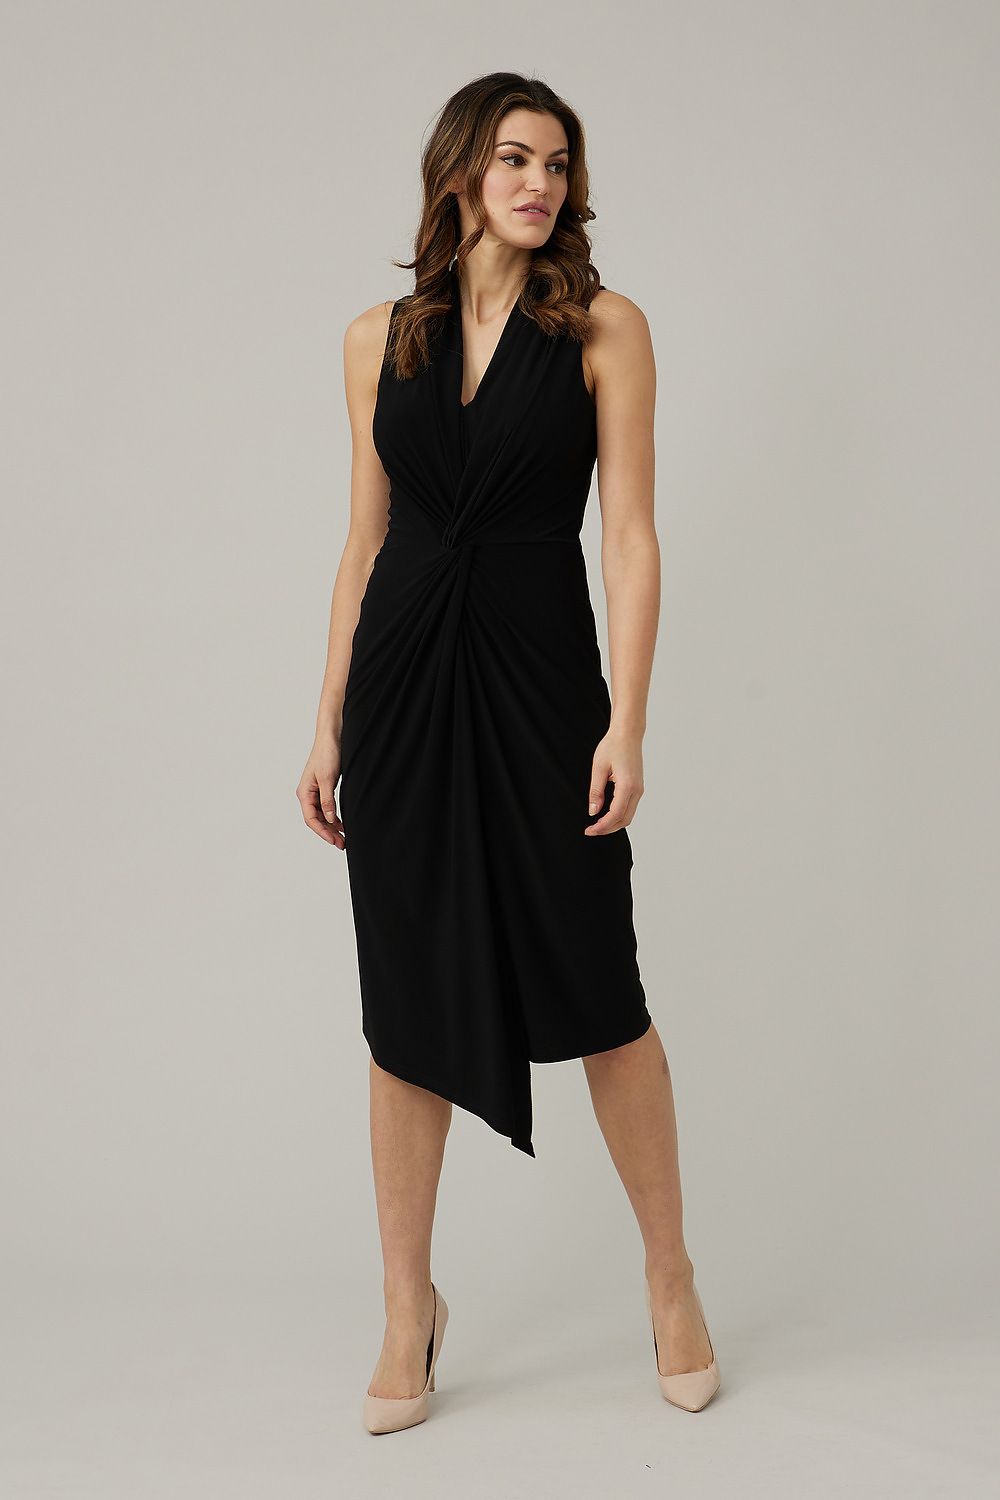 Joseph Ribkoff Wrap Front Dress Style 221348. Black